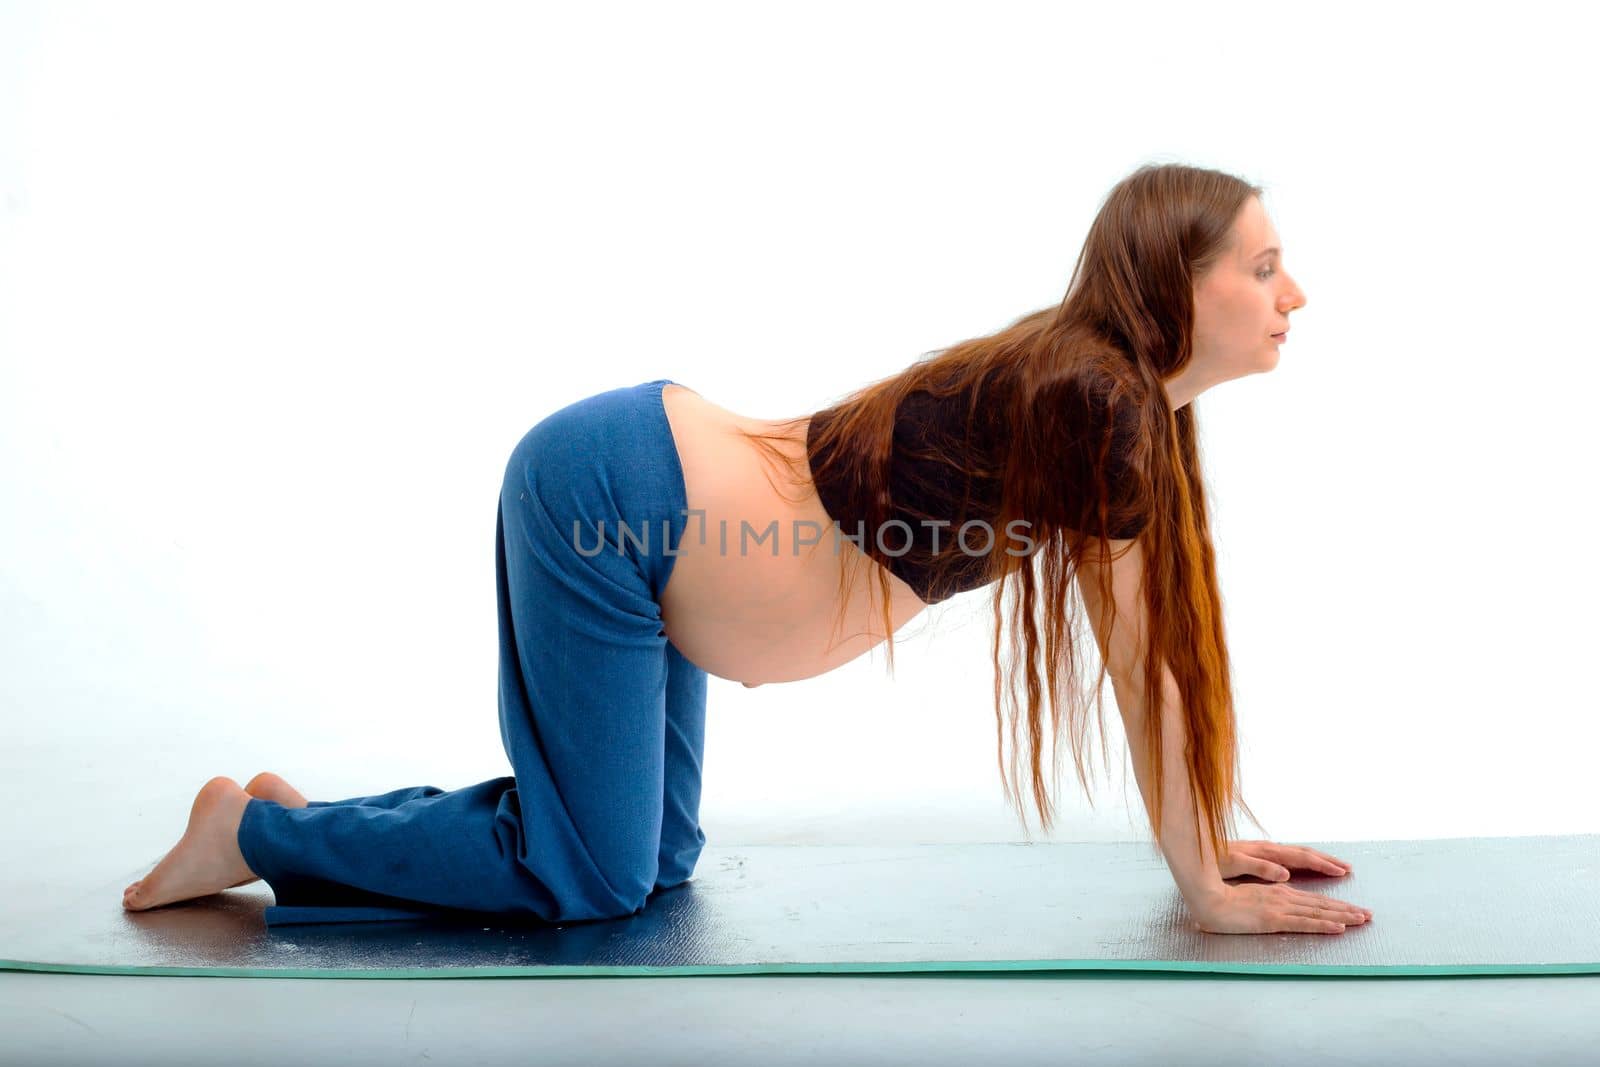 Stage of pregnancy. pregnant woman training yoga by kajasja